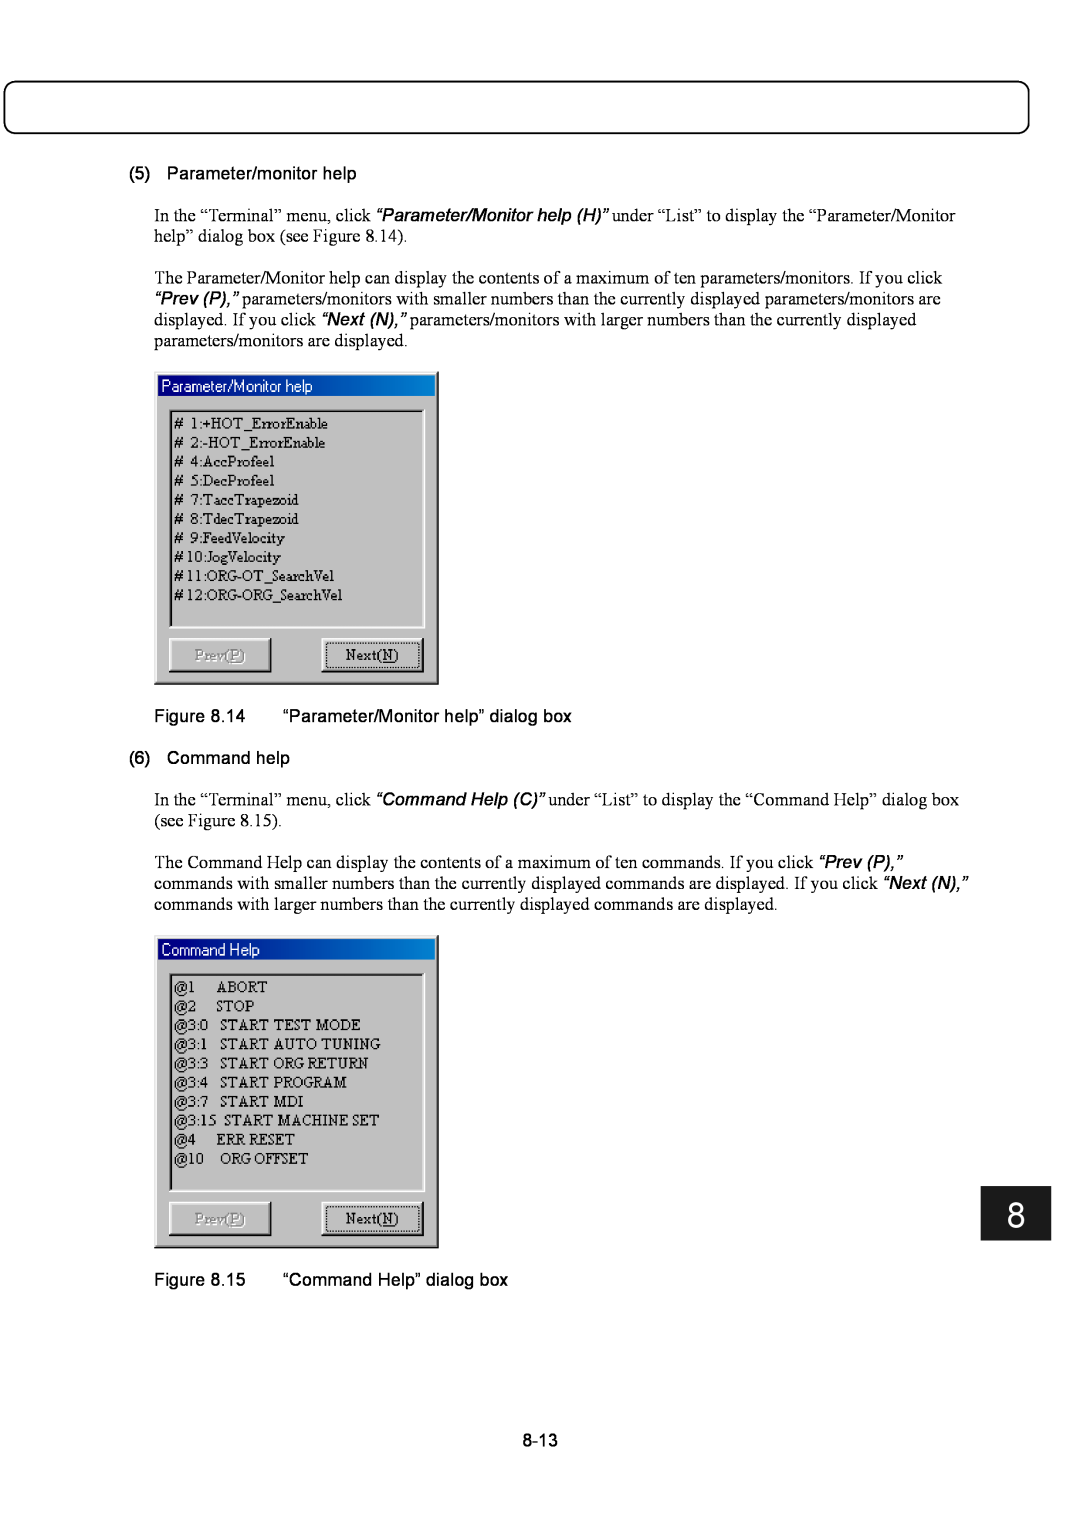 Parker Hannifin G2 manual Parameter/monitor help, 14 “Parameter/Monitor help” dialog box 6 Command help, 8-13 